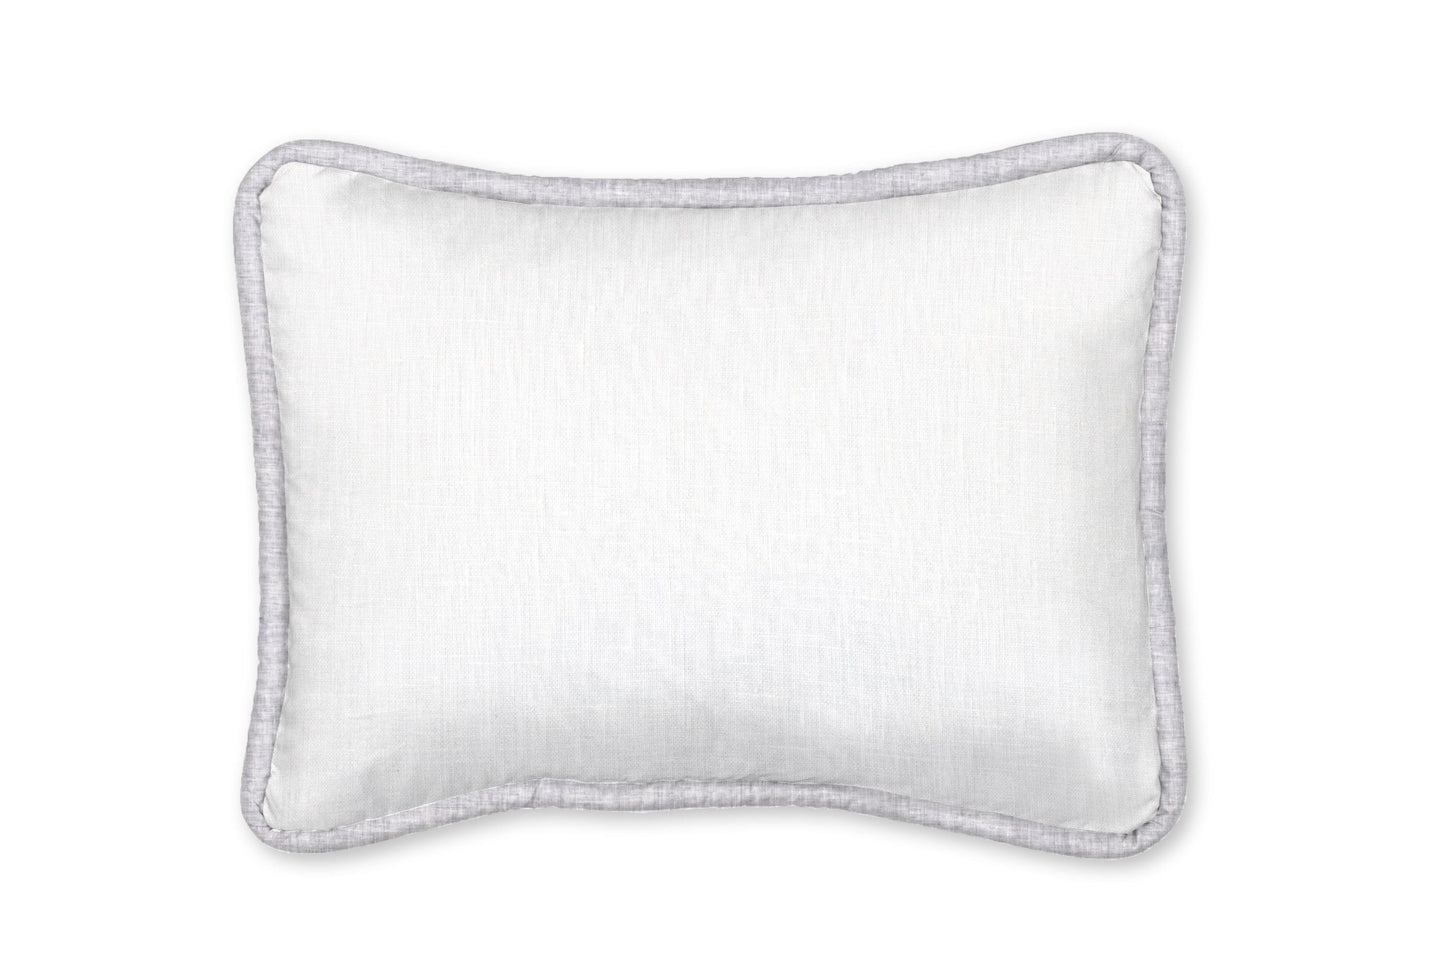 Savannah Gray Linen Decorative Pillow - New Arrivals Inc